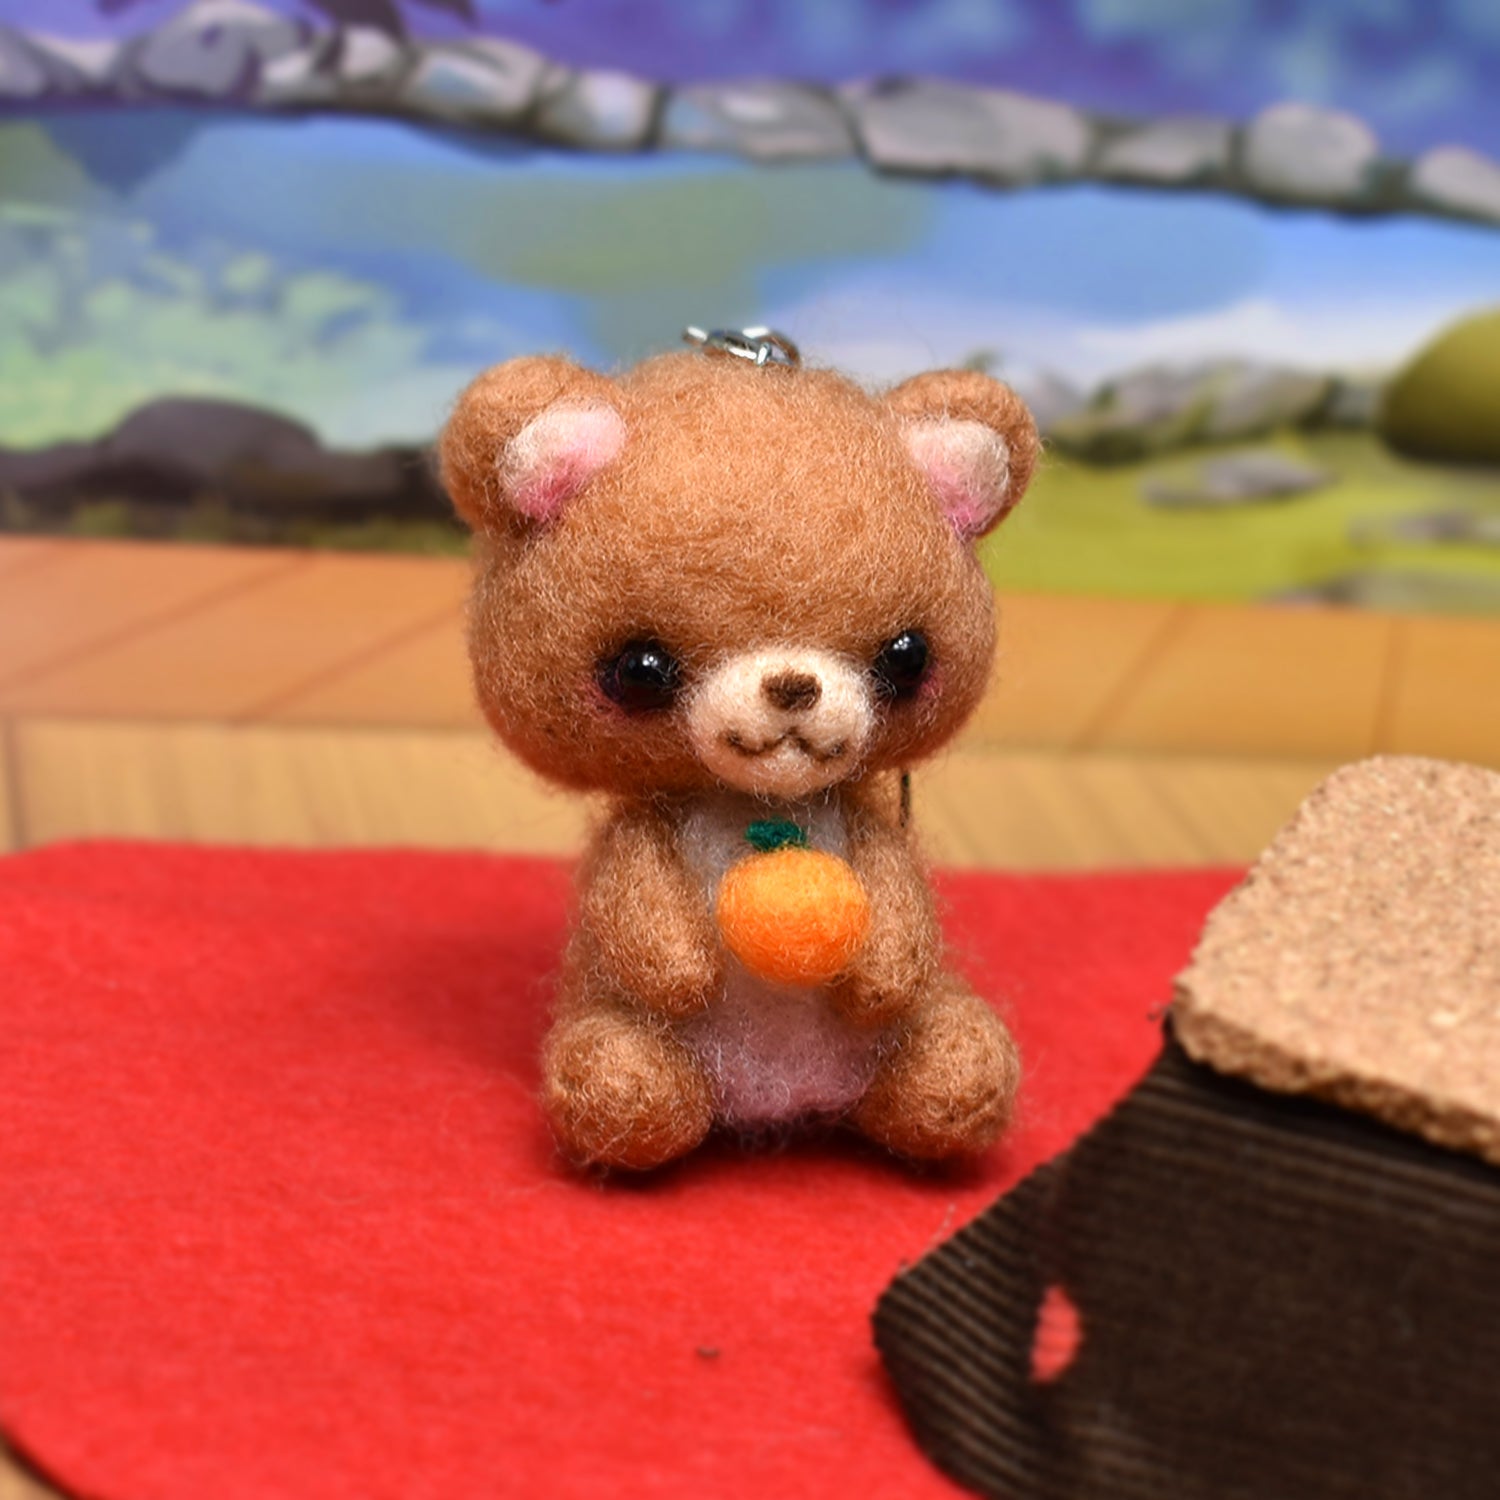 Little Bear's Holiday Vacation Needle Felted Figure and Kotatsu Set